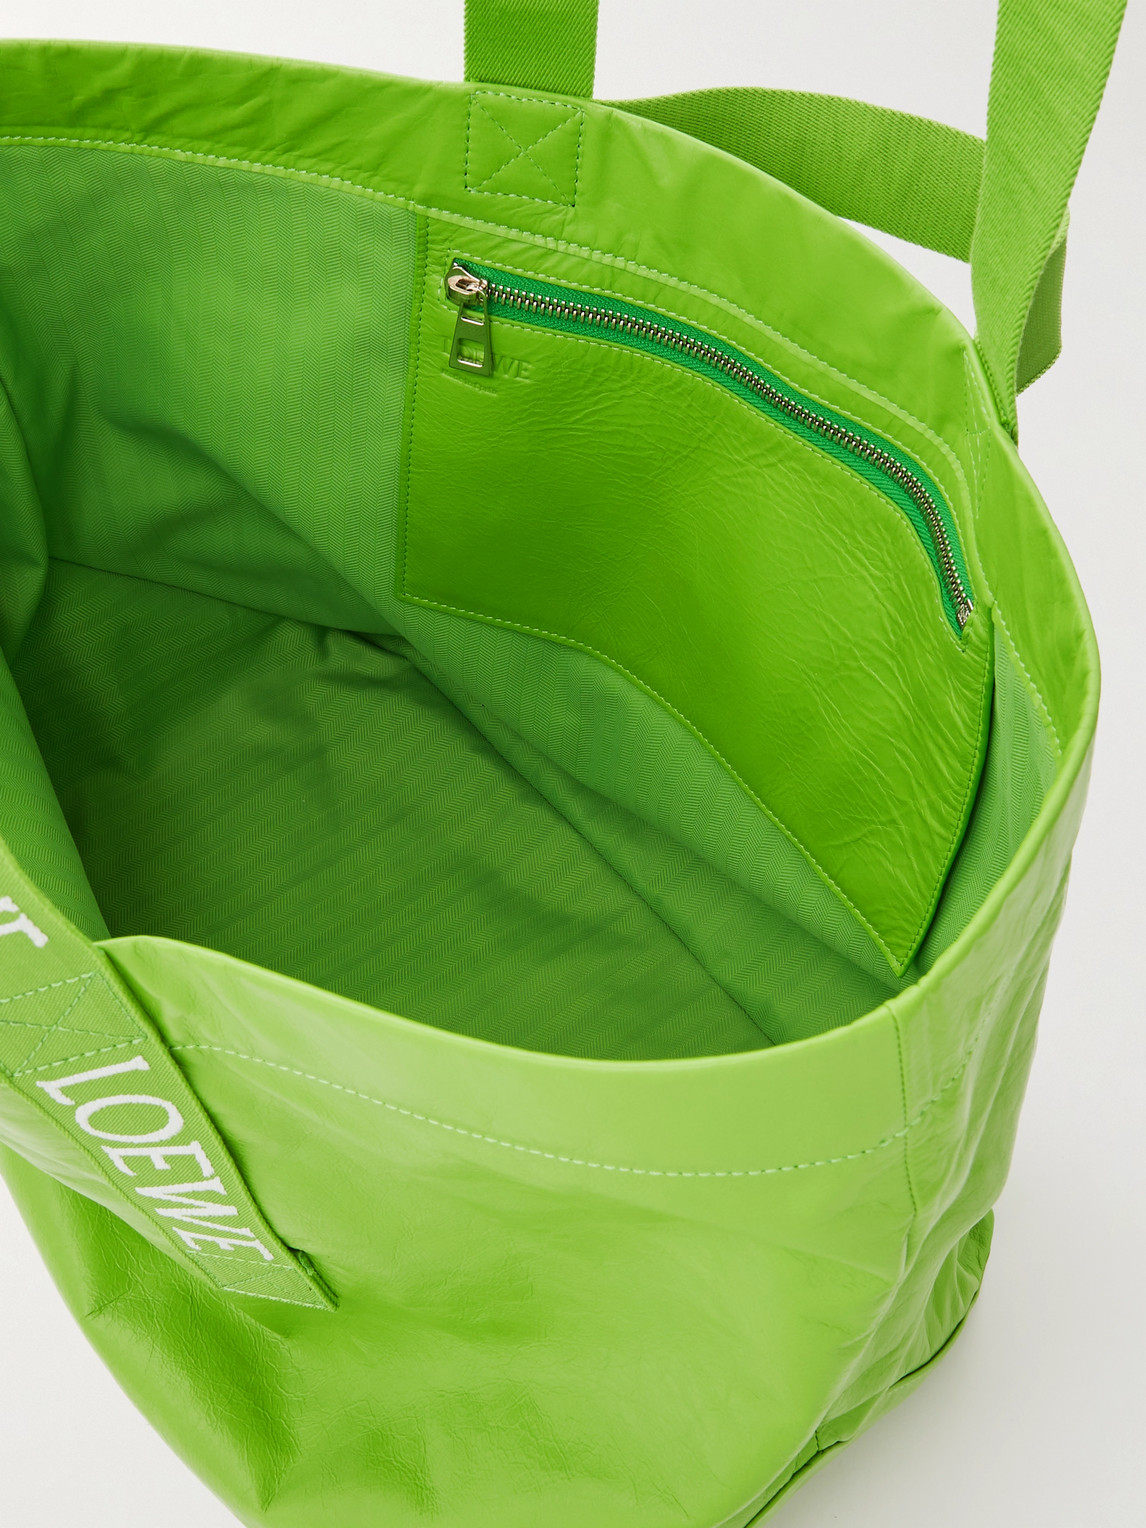 Shop Loewe Distressed Leather Tote Bag In Green